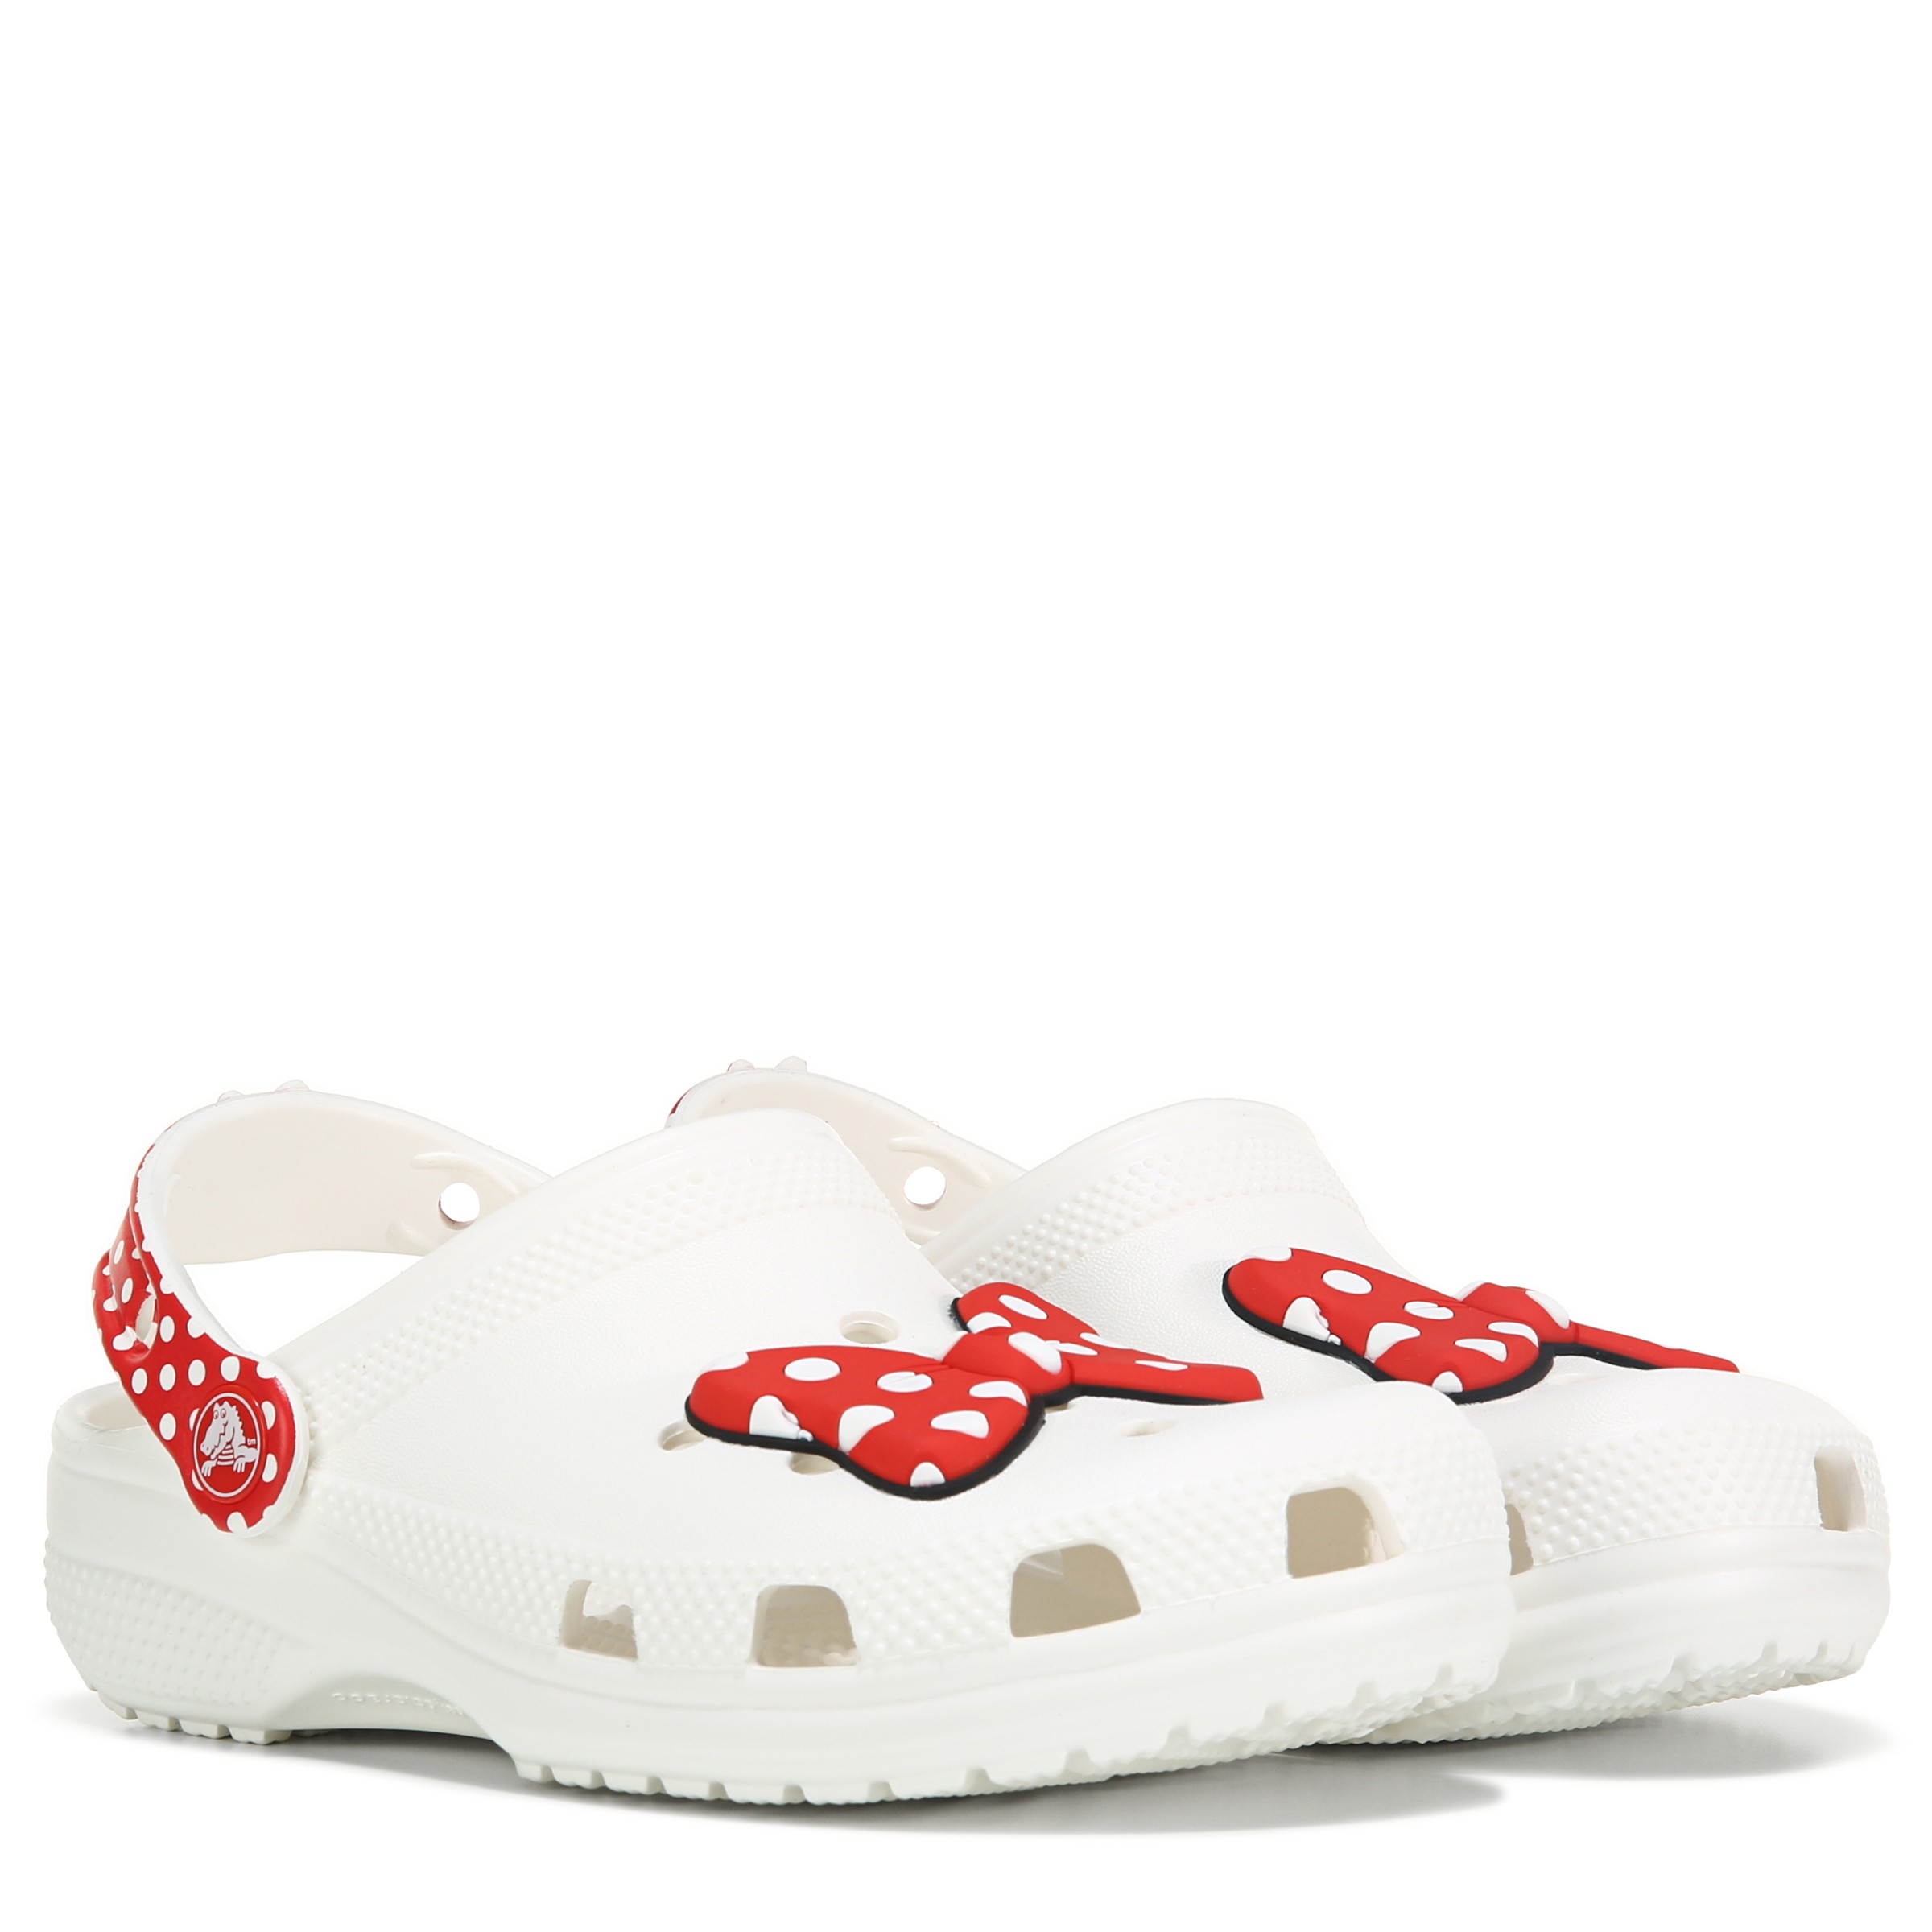 Minnie Mouse Crocs -  Canada